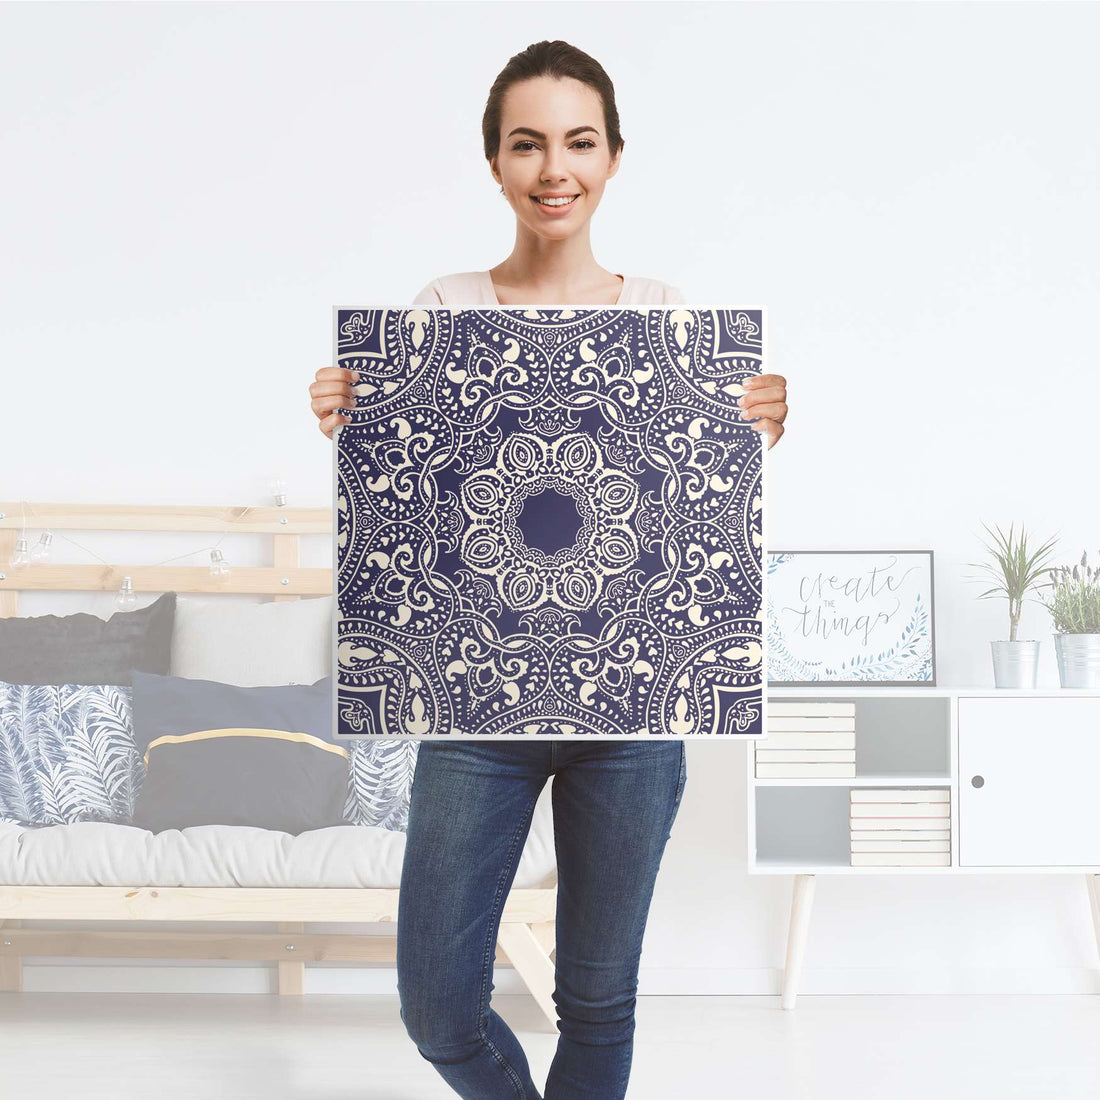 Möbel Klebefolie Blue Mandala - IKEA Hemnes Beistelltisch 55x55 cm - Folie